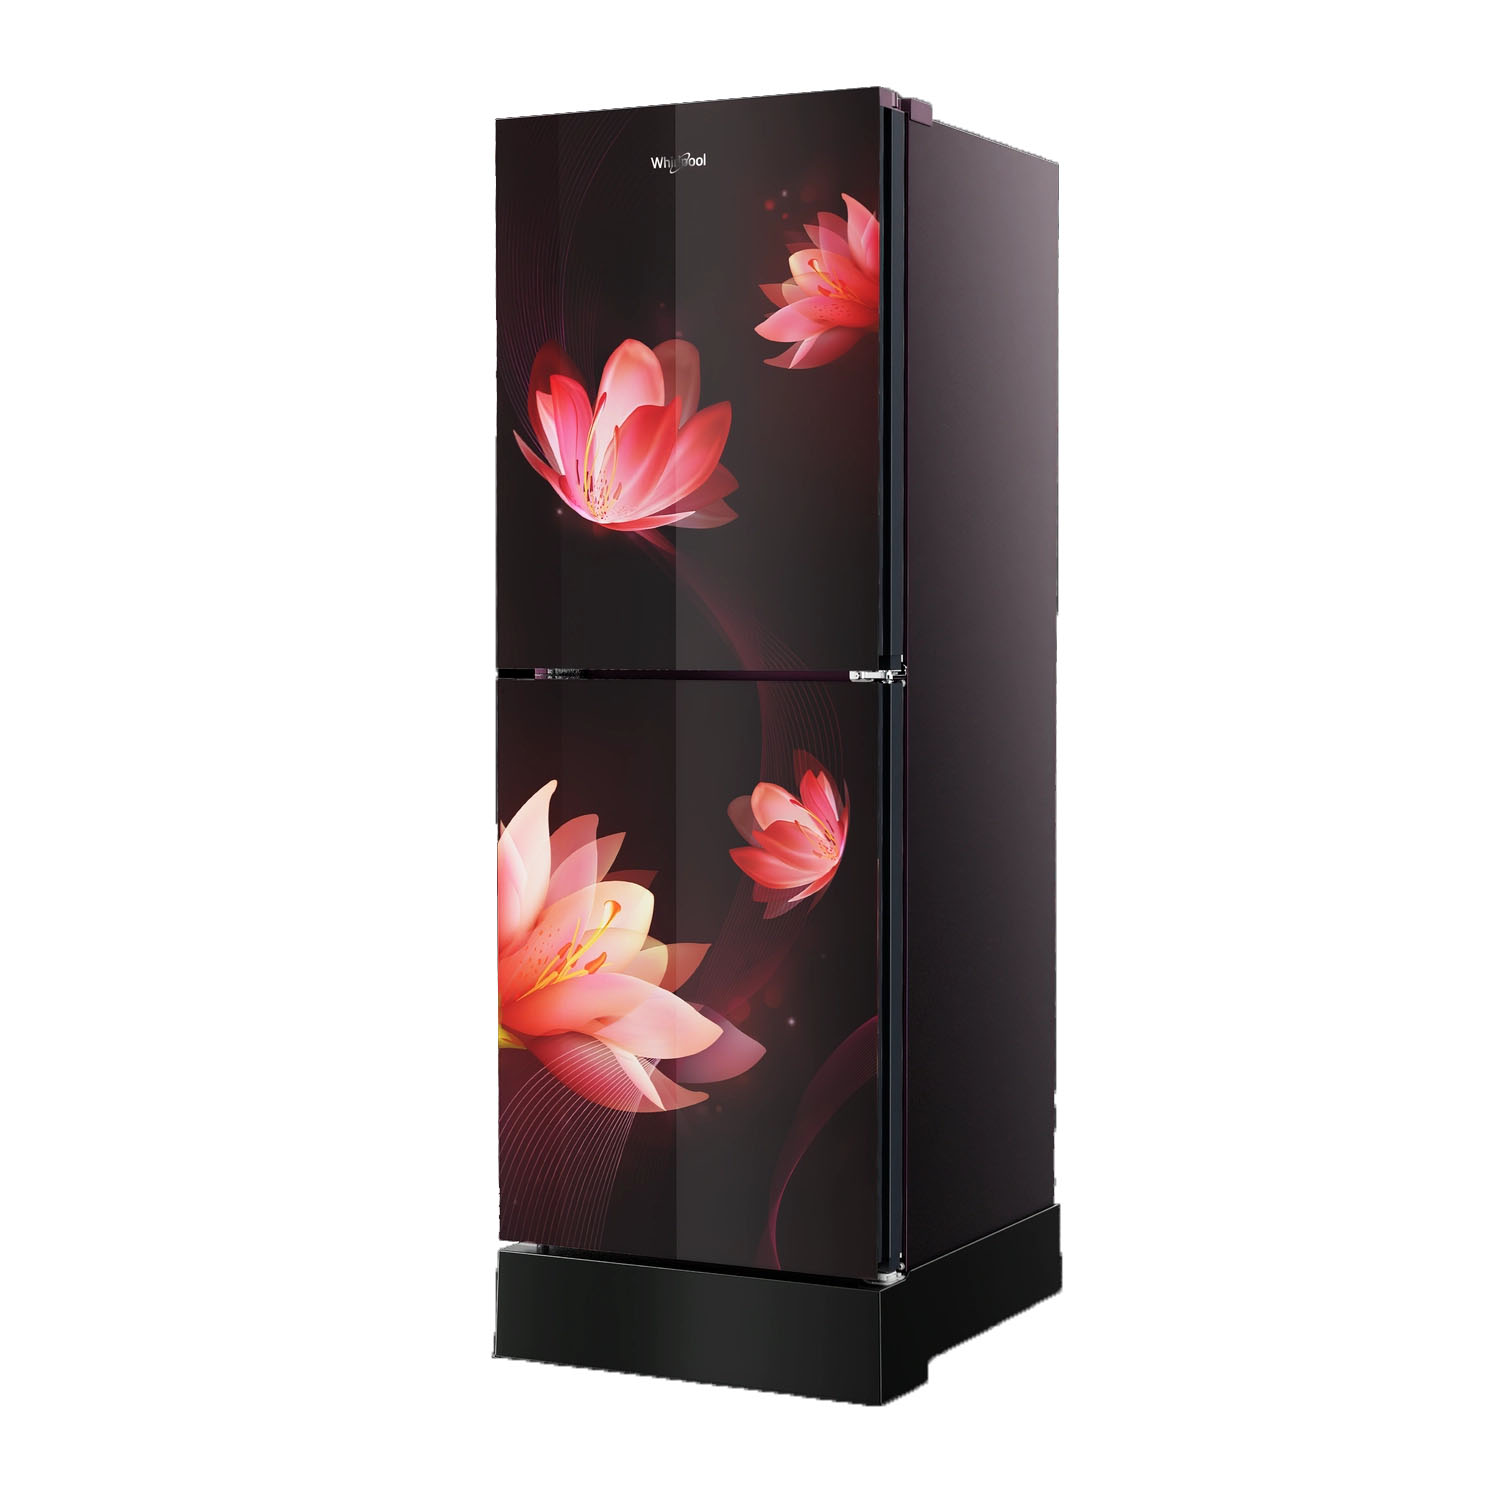 WHIRLPOOL 278 Liter Refrigerator FreshMagic Pro Florina Red